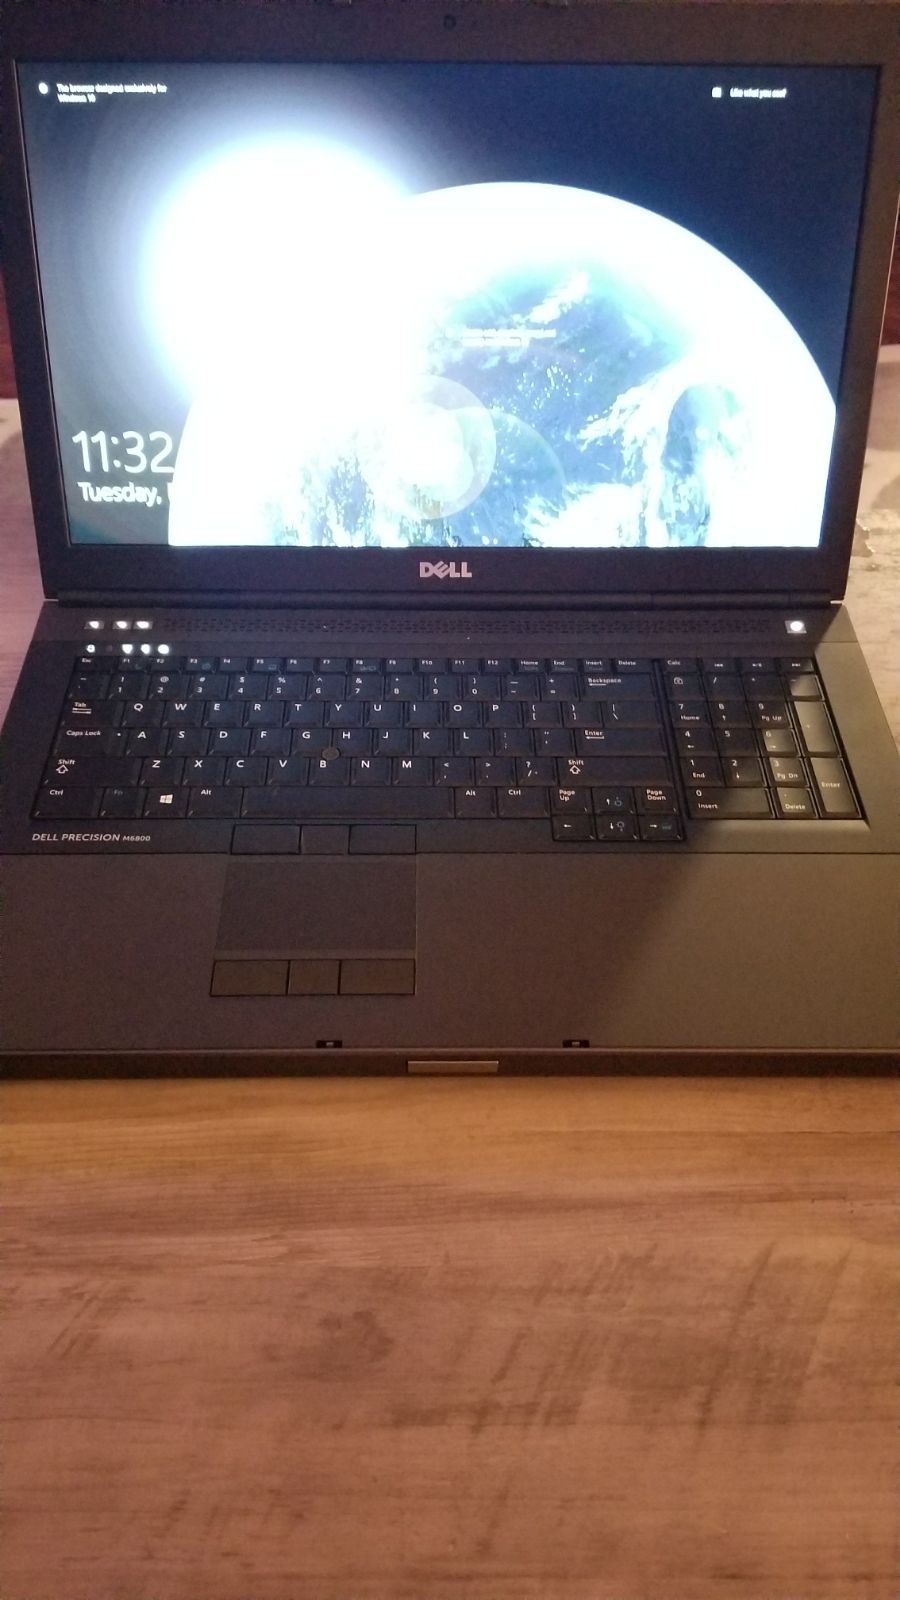 Great Condition Dell Precision M6800 Laptop. Asking price $475 obo